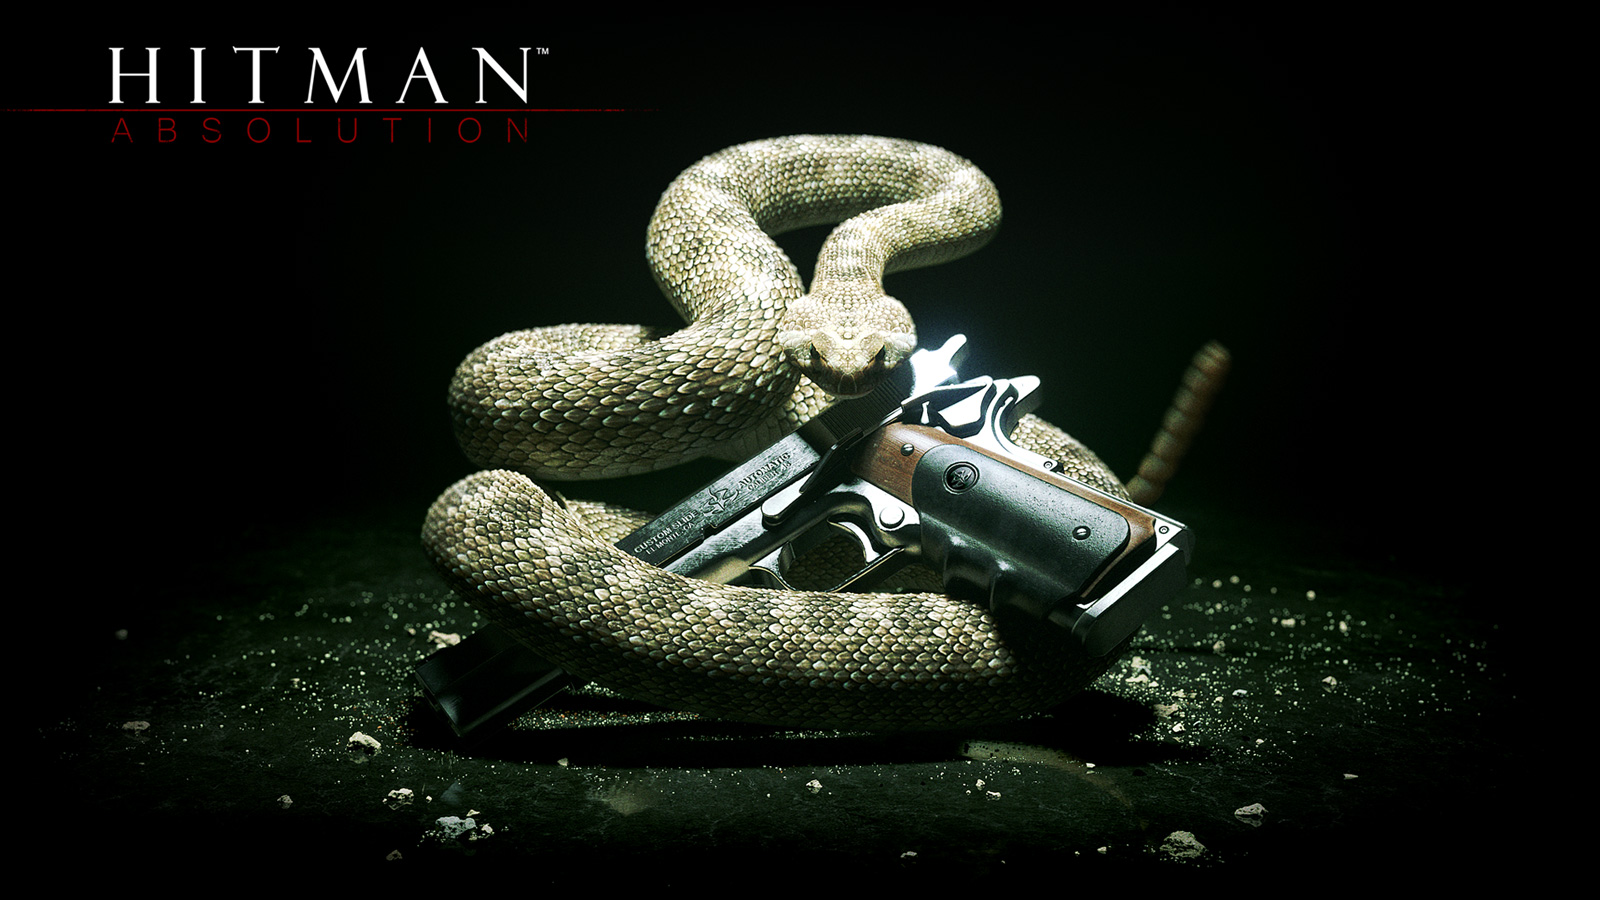 hitman, snake, video game, hitman: absolution, gun